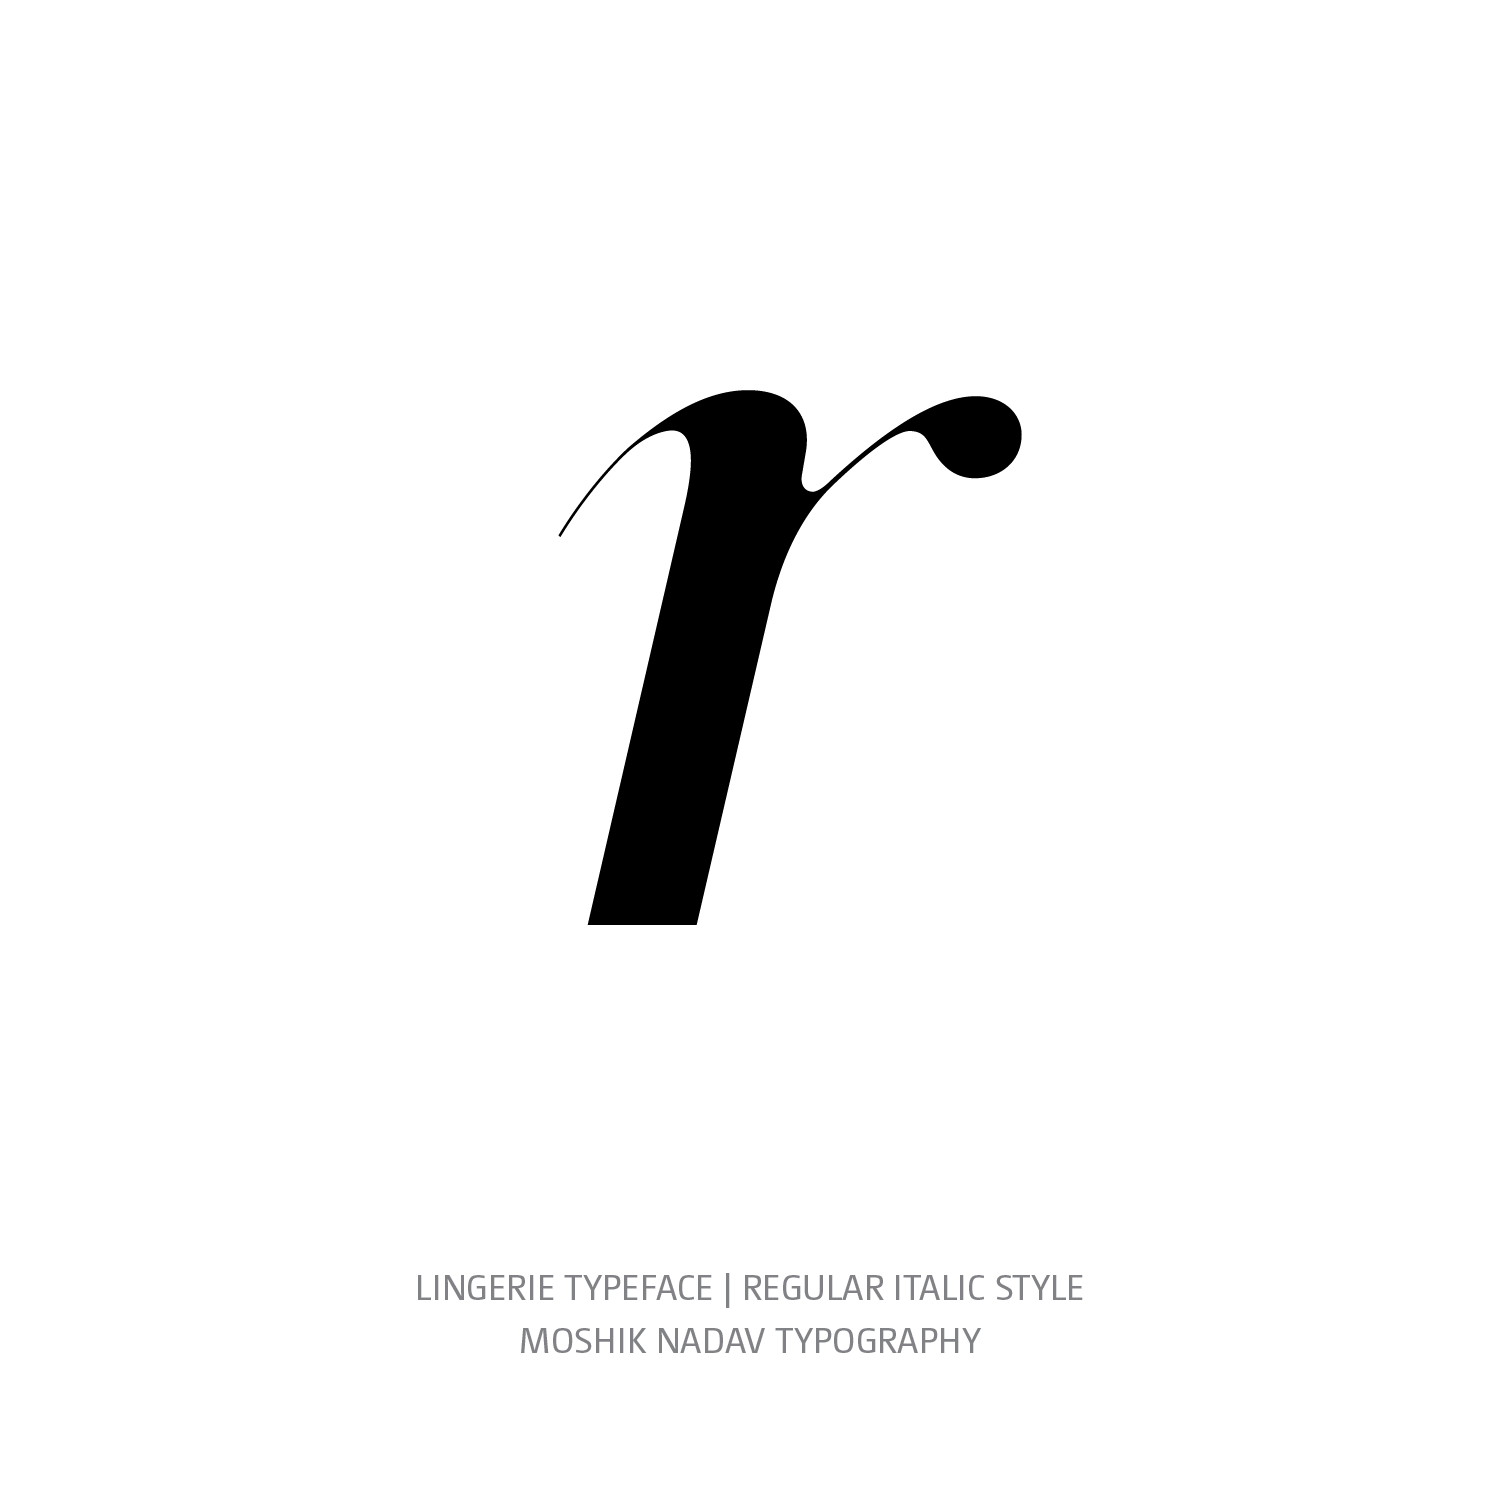 Lingerie Typeface Regular Italic r - Fashion fonts by Moshik Nadav Typography